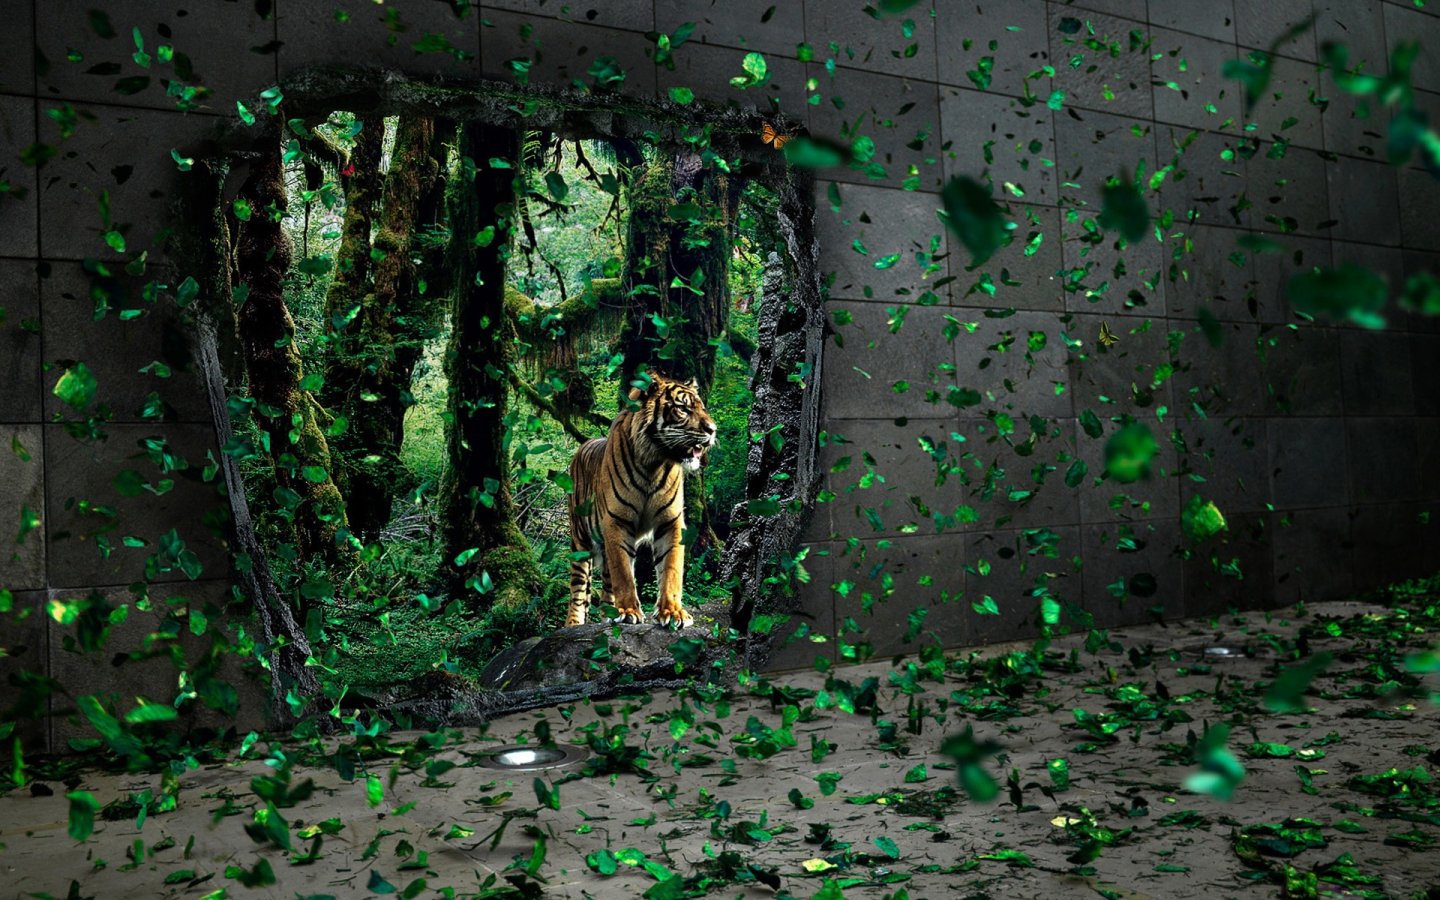 Brave tigre apparition for 1440 x 900 widescreen resolution